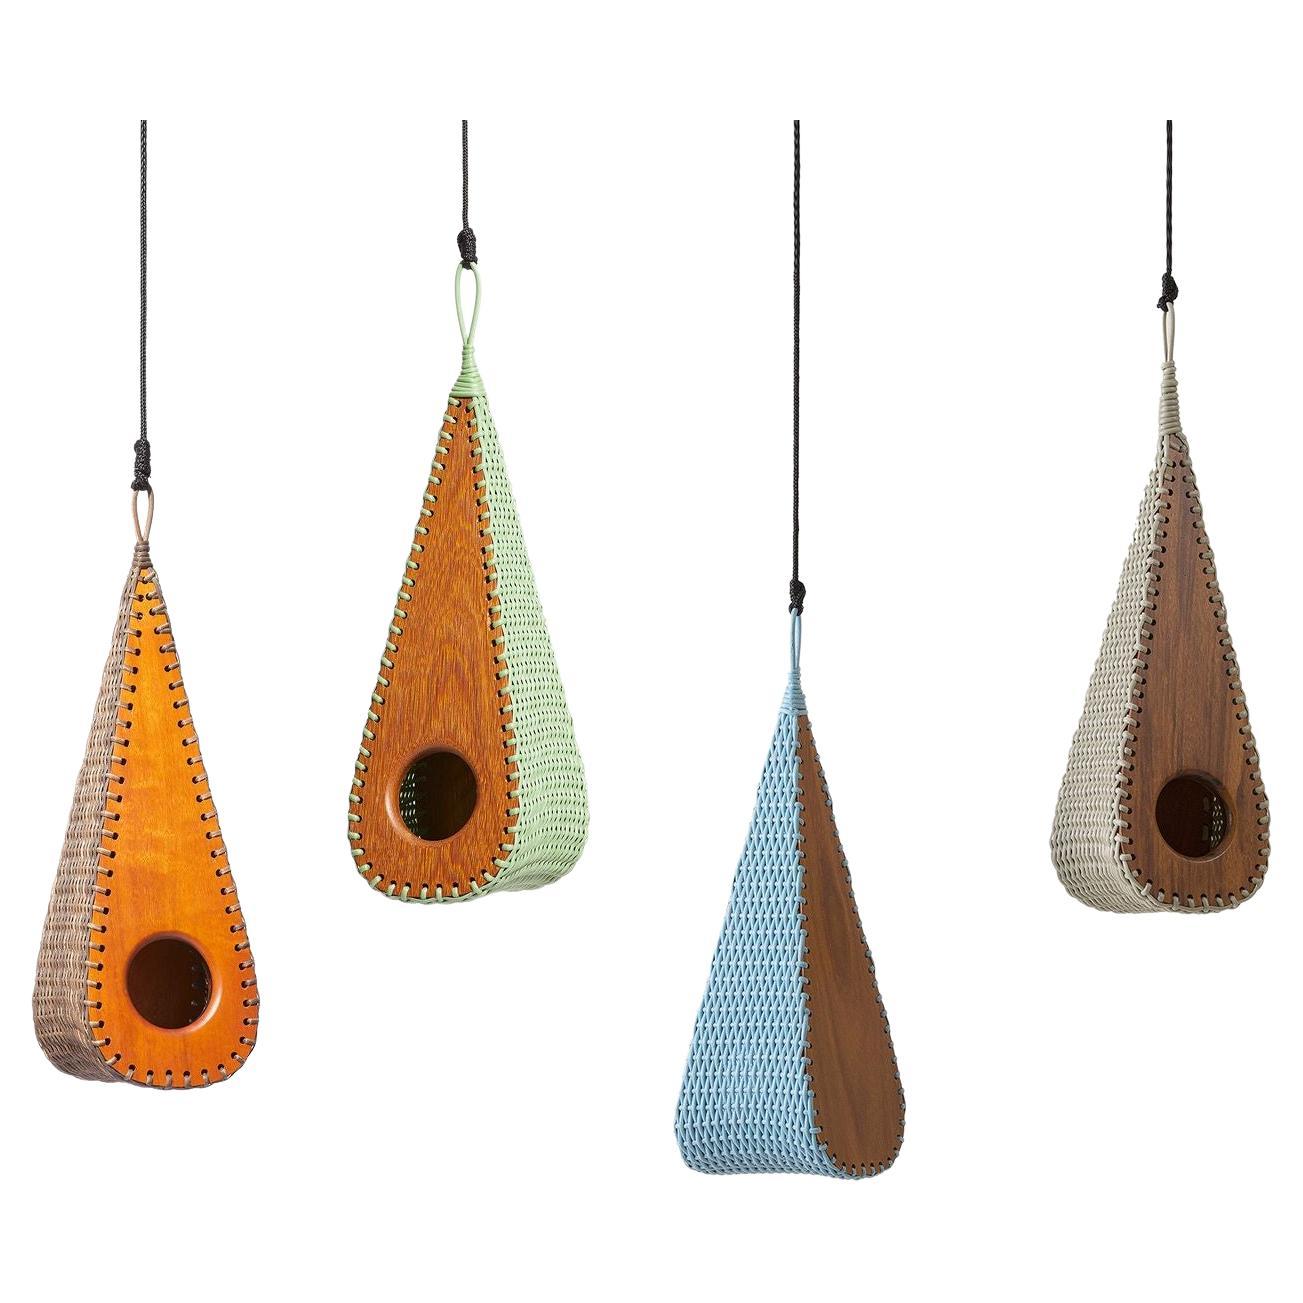 Birdhouse - Gotinha - Brazilian Contemporary Outdoor of Wood and  Fibers